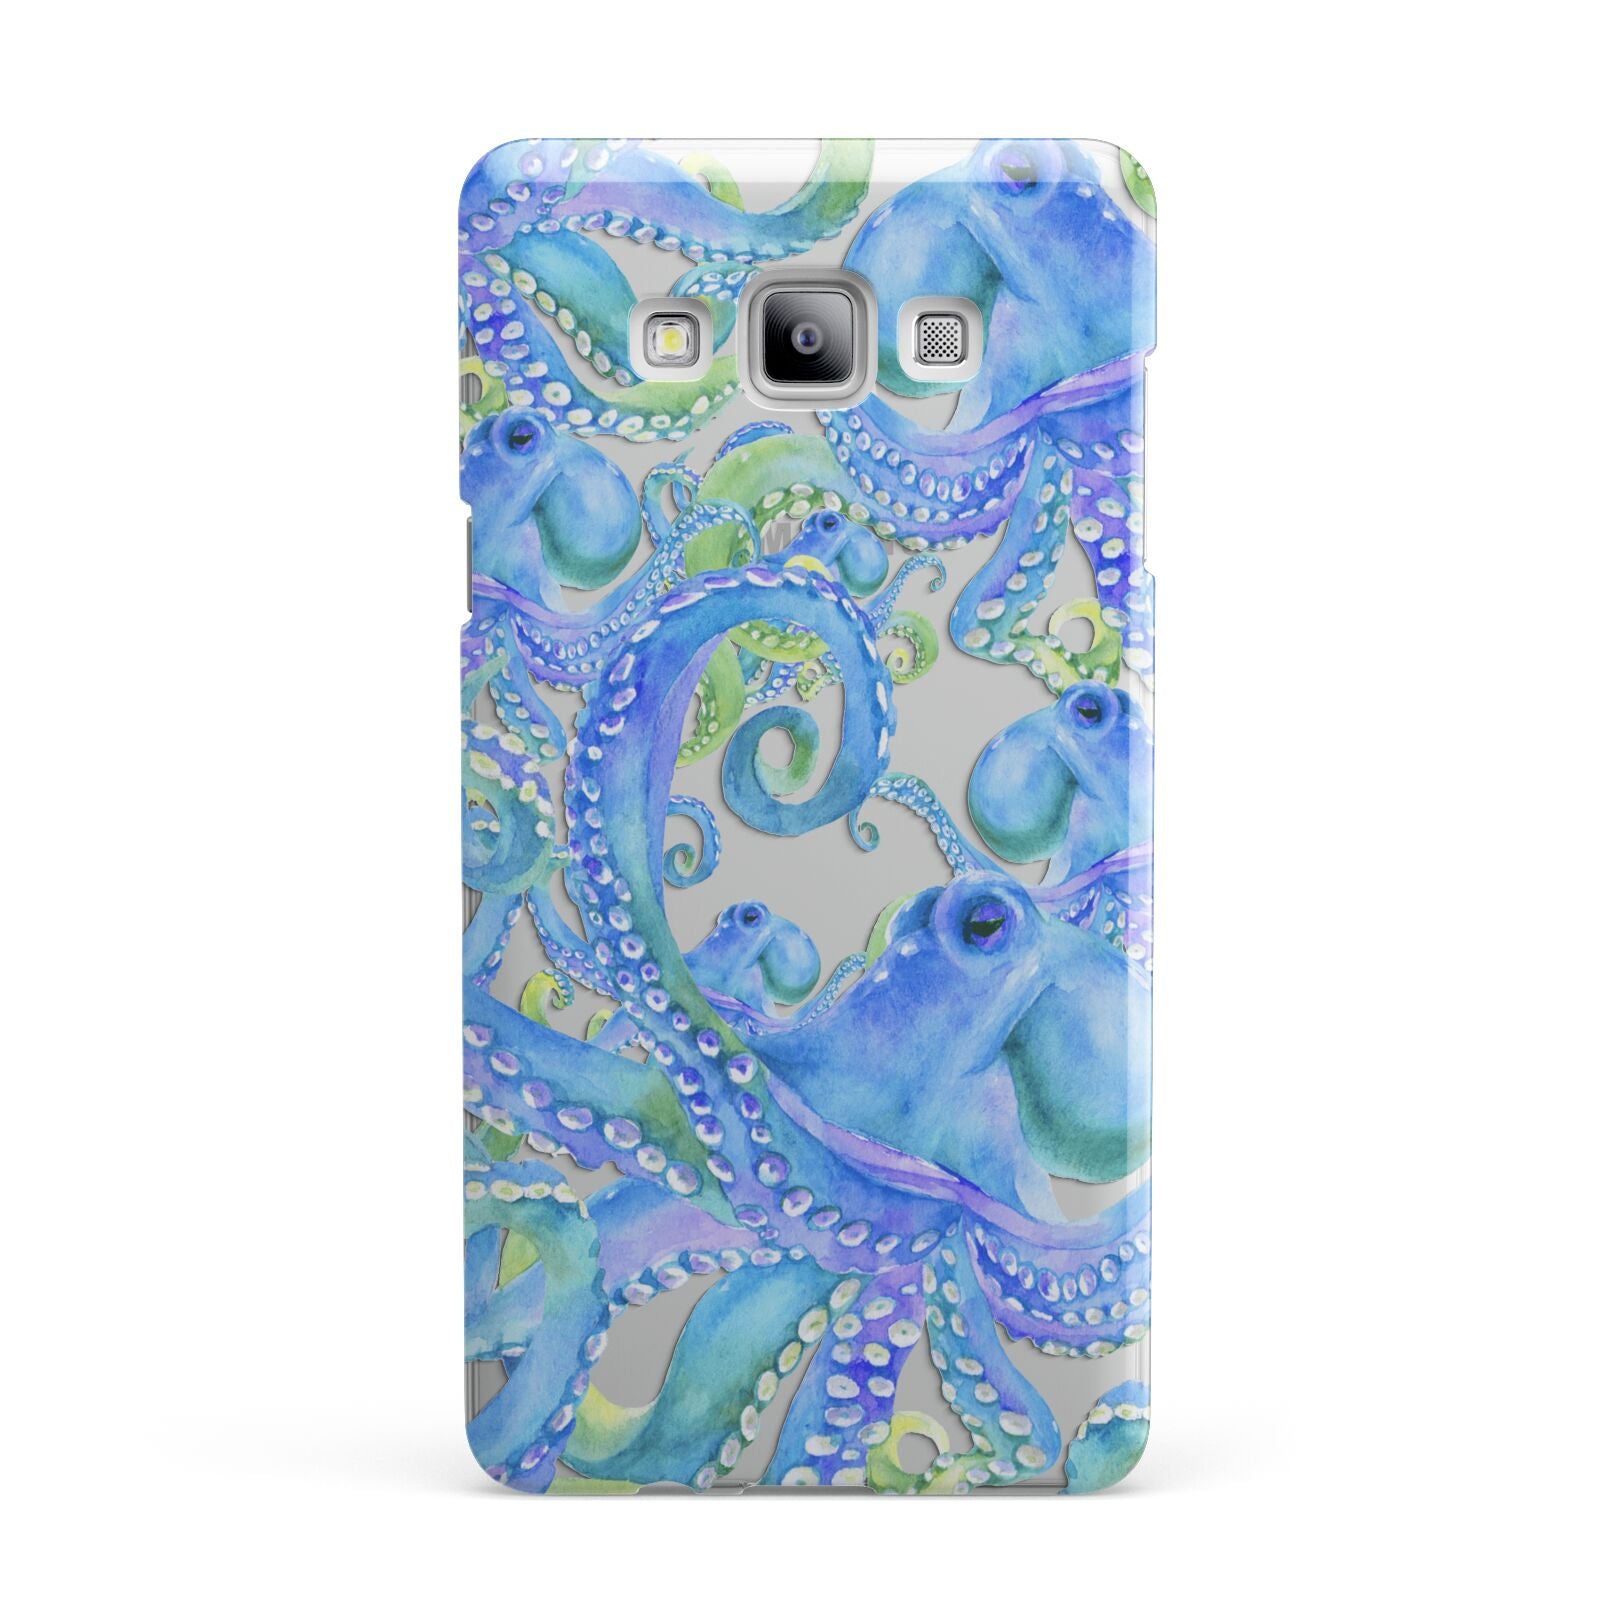 Octopus Samsung Galaxy A7 2015 Case